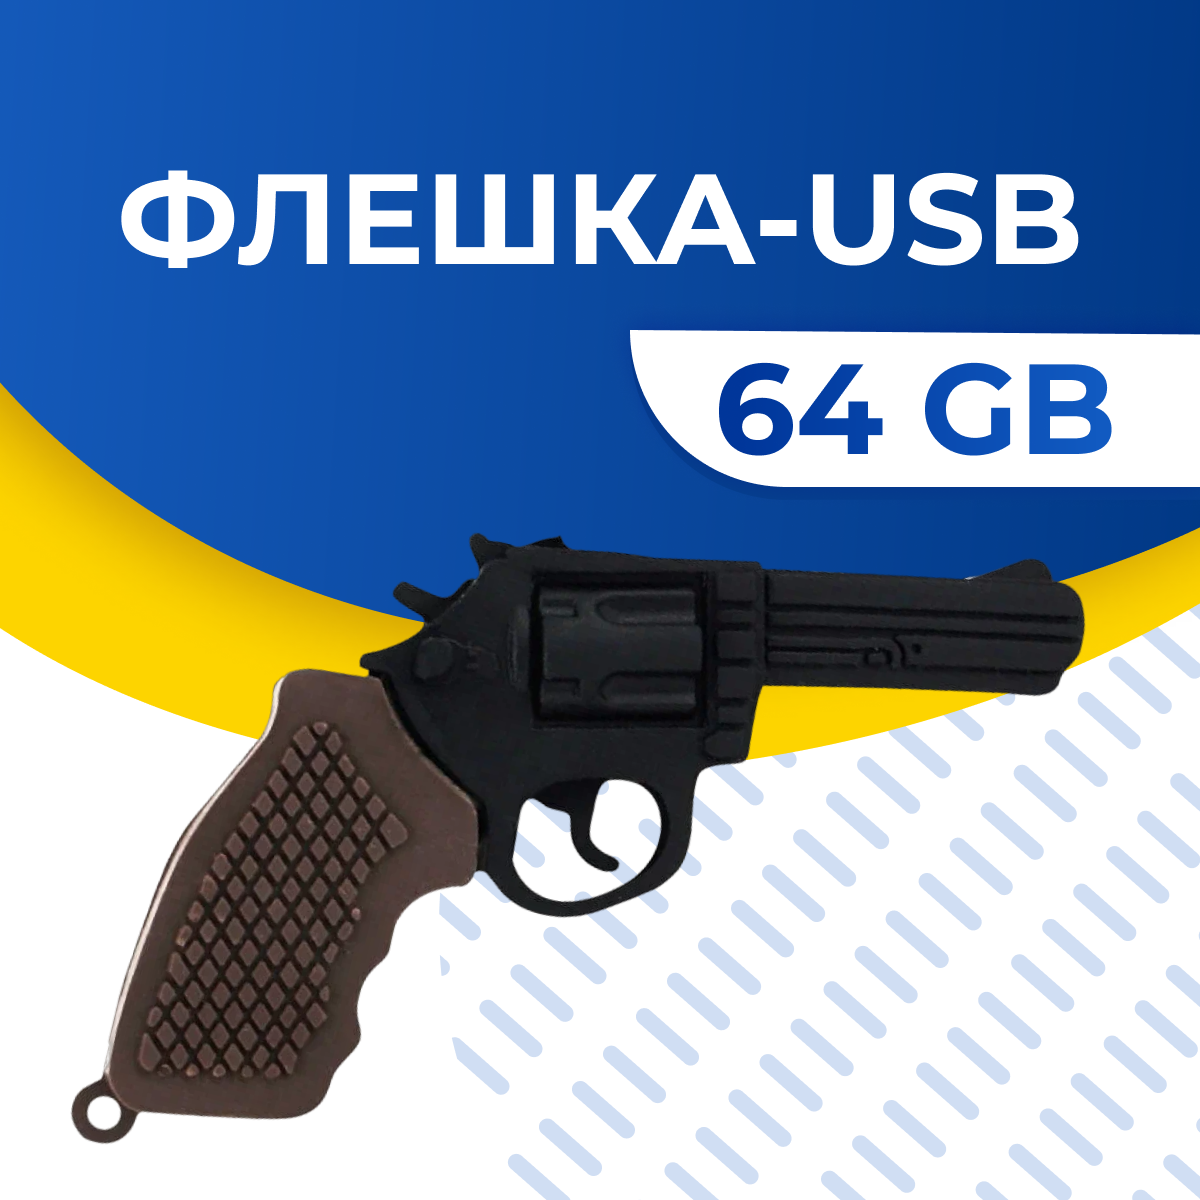 USB Флешка / Оригинальная подарочная флешка USB 64GB / Флеш память ЮСБ 64 ГБ / Внешний накопитель USB Flash Drive (Револьвер)